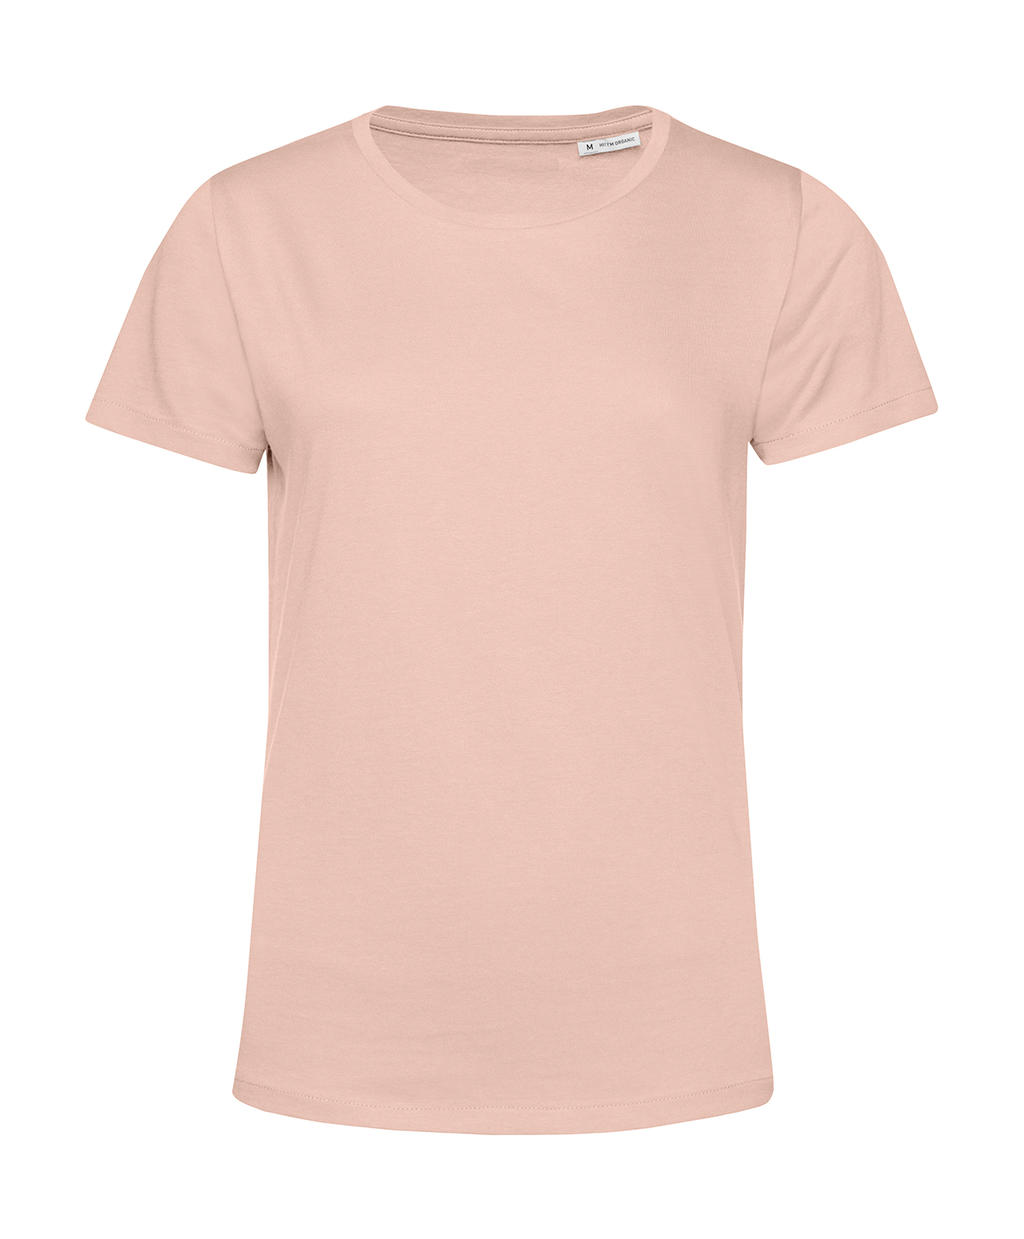 Dámske tričko #organic inspire E150 /women - soft rose